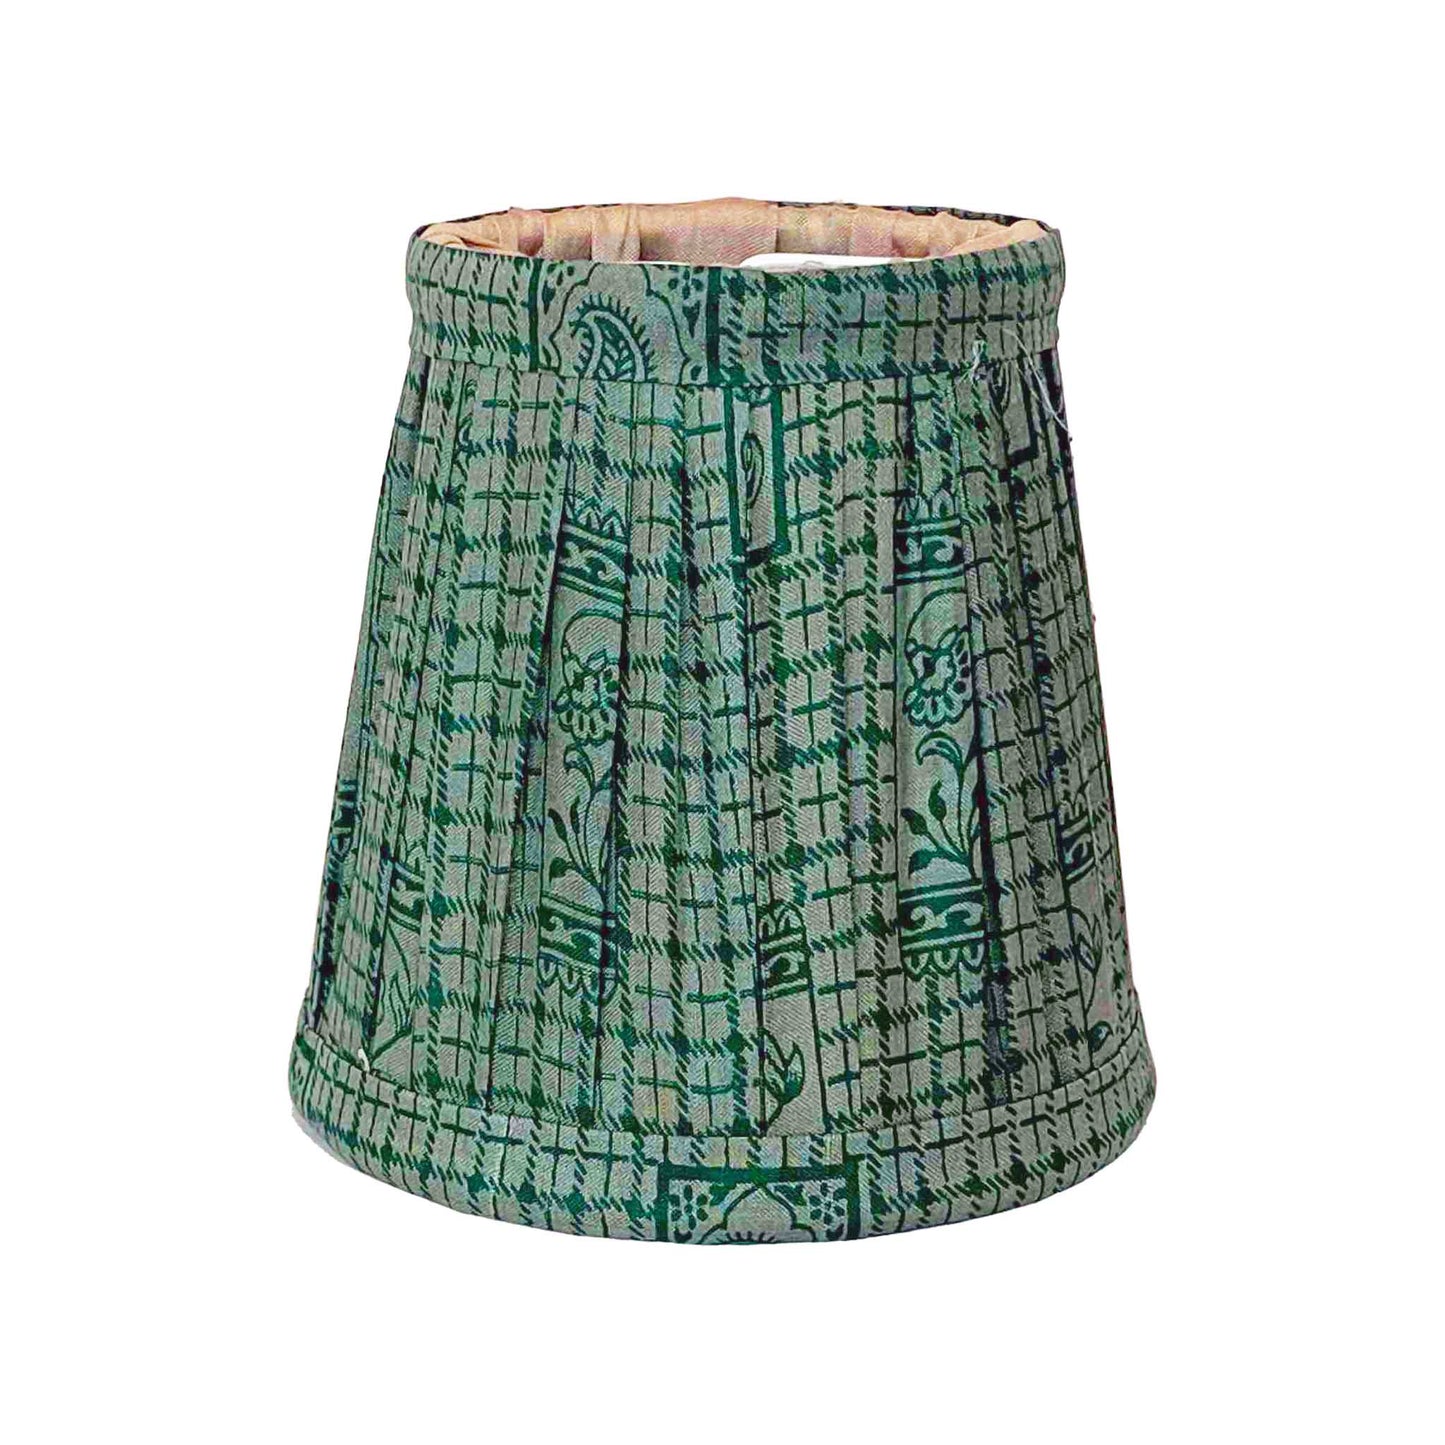 Teal patterned vintage silk sari lampshade